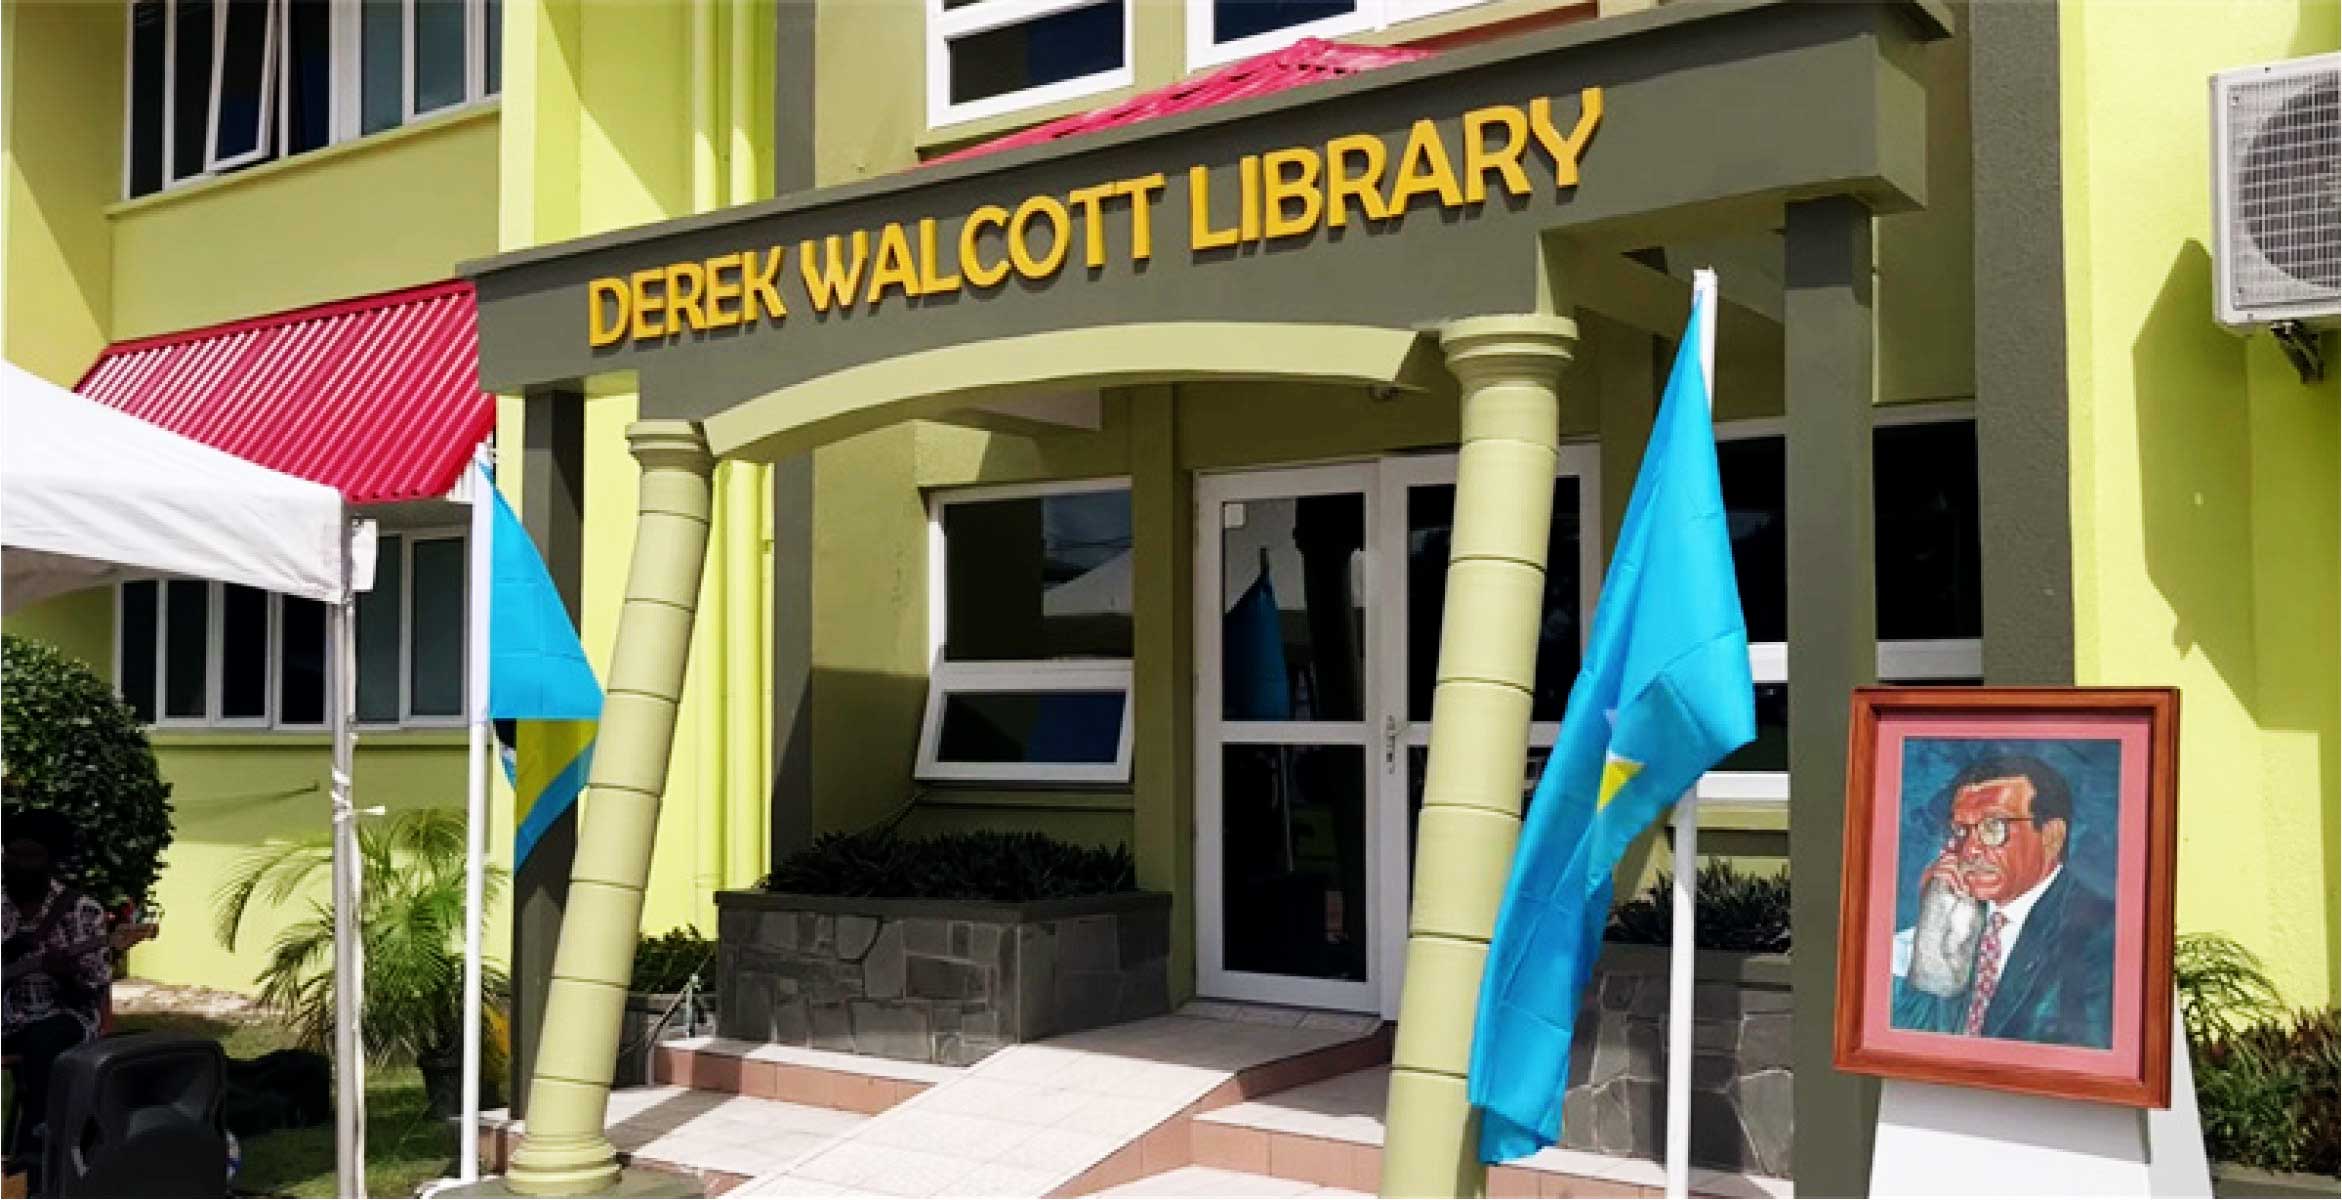 Derek Walcott Library at SALCC